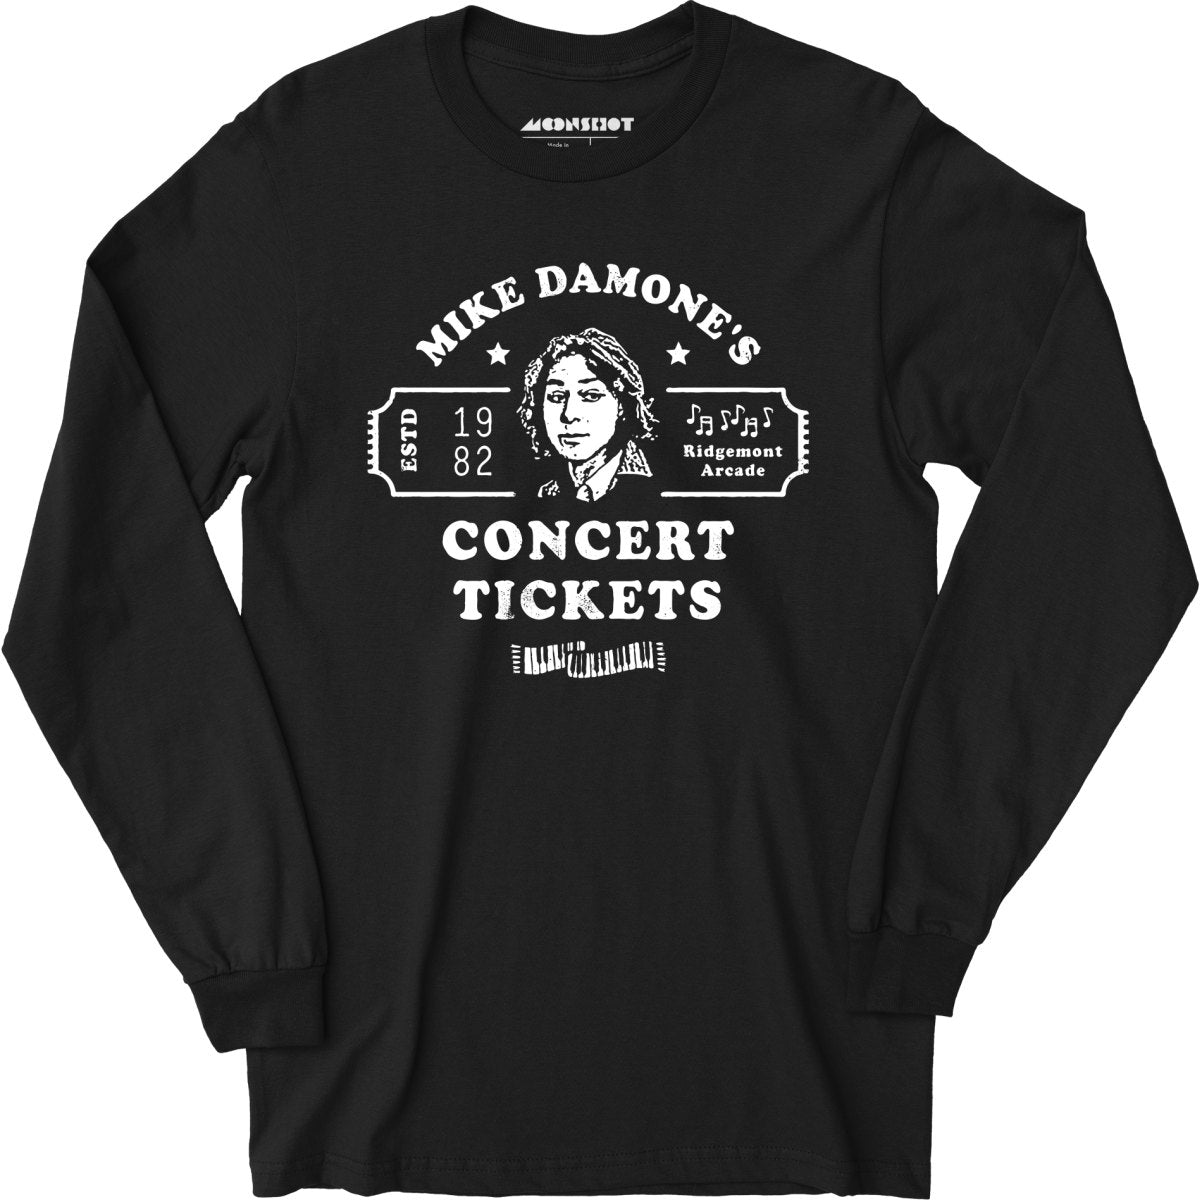 Mike Damone's Concert Tickets - Long Sleeve T-Shirt